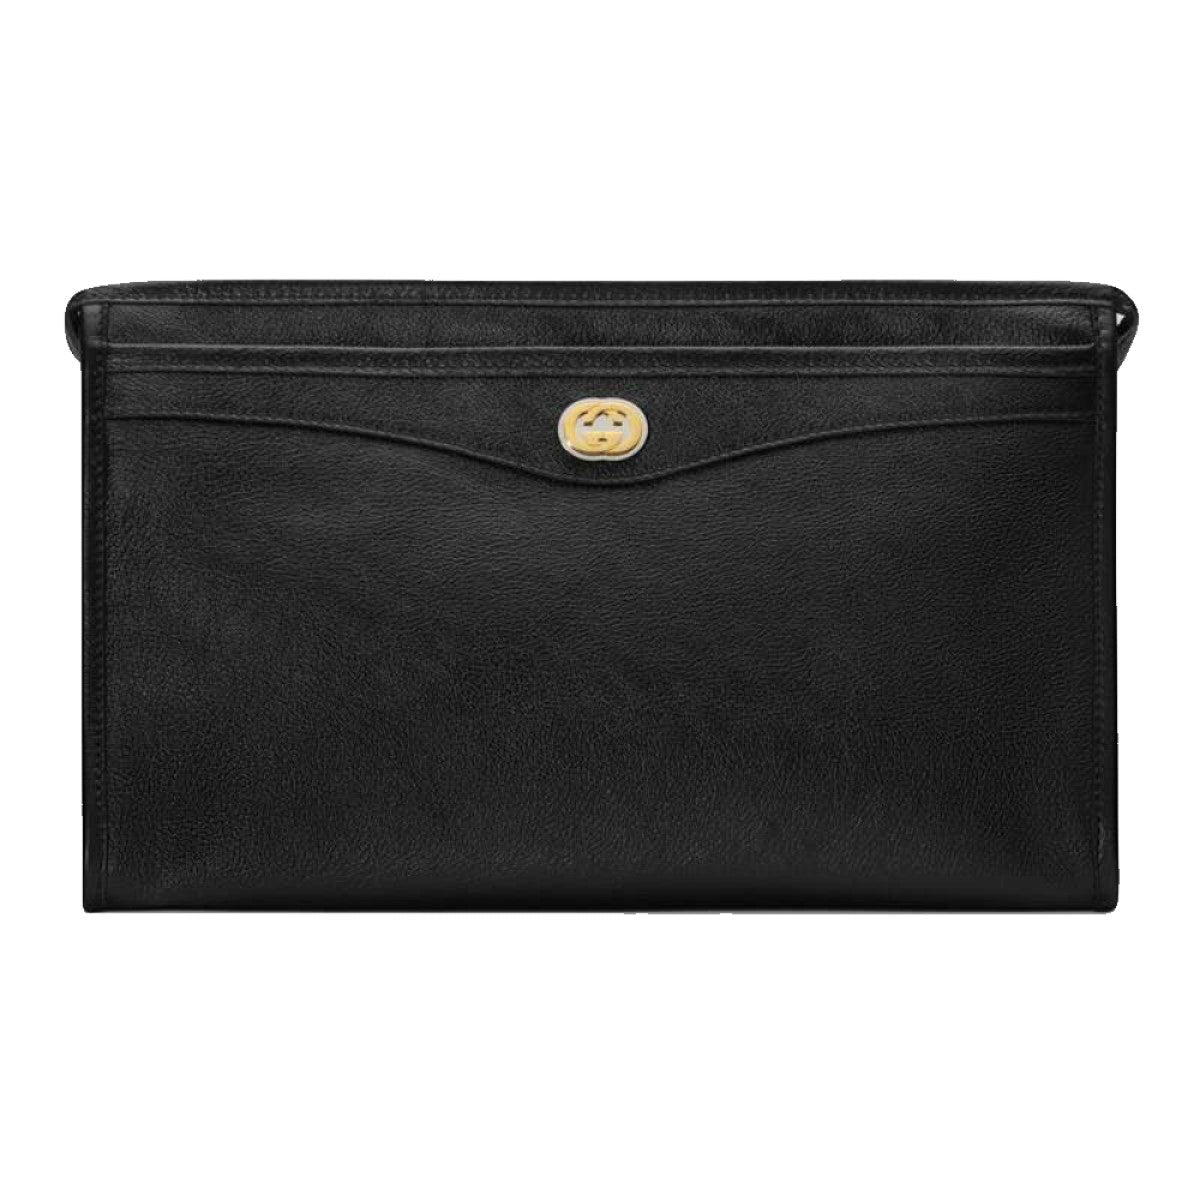 Gucci Morpheus Black Fluffy Calf Leather Cosmetic Pouch Bag 575991 - LUXURYMRKT